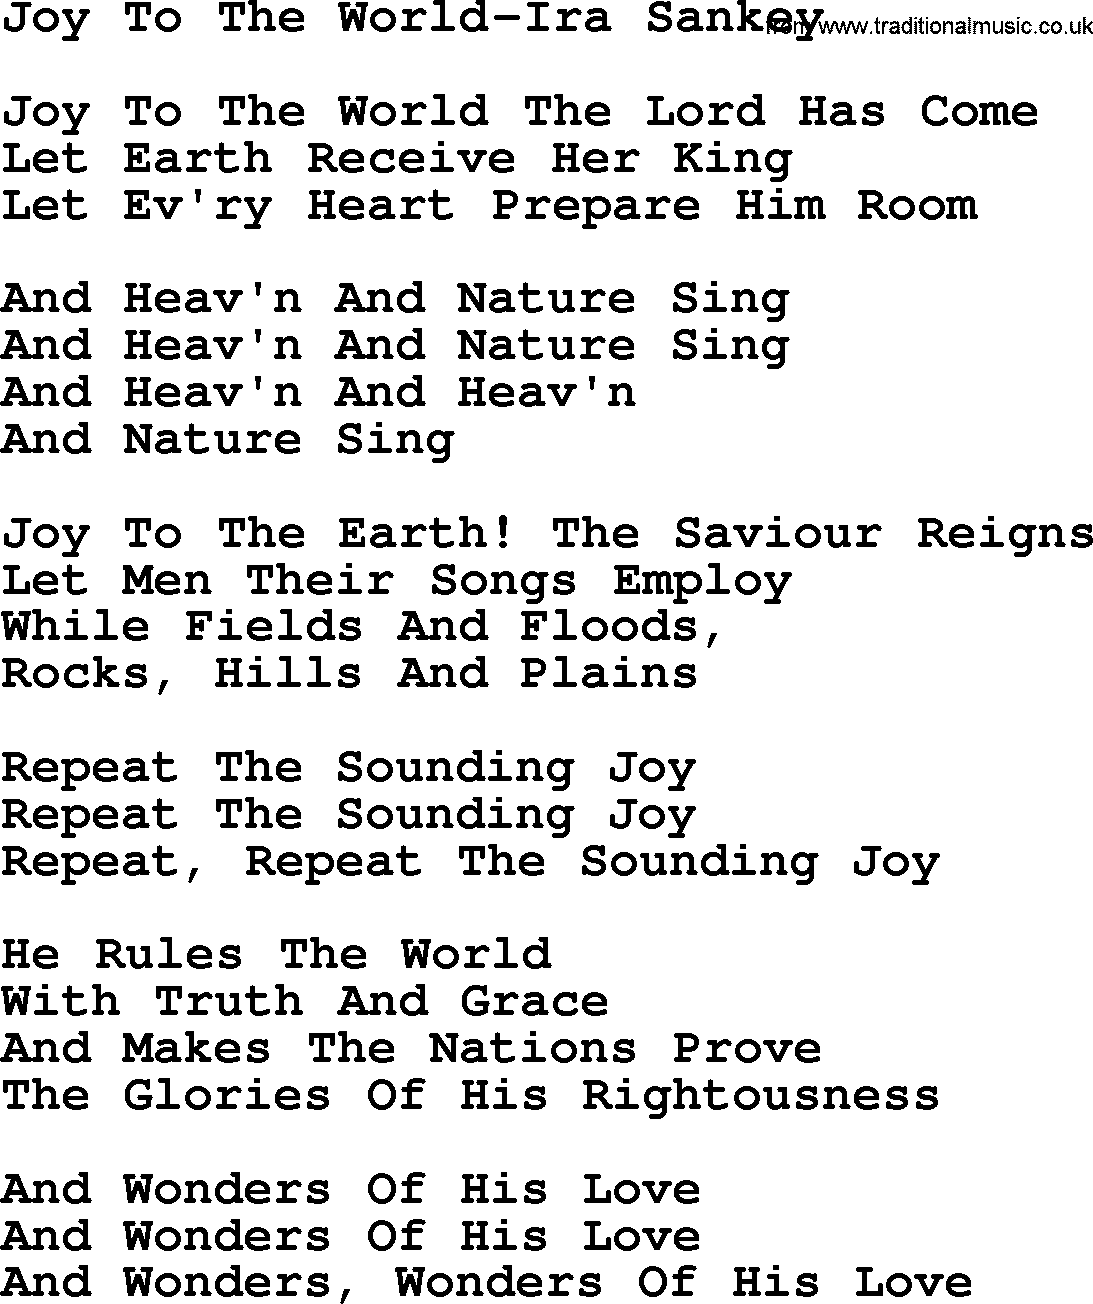 Joy To The World Lyrics | Search Results | Calendar 2015